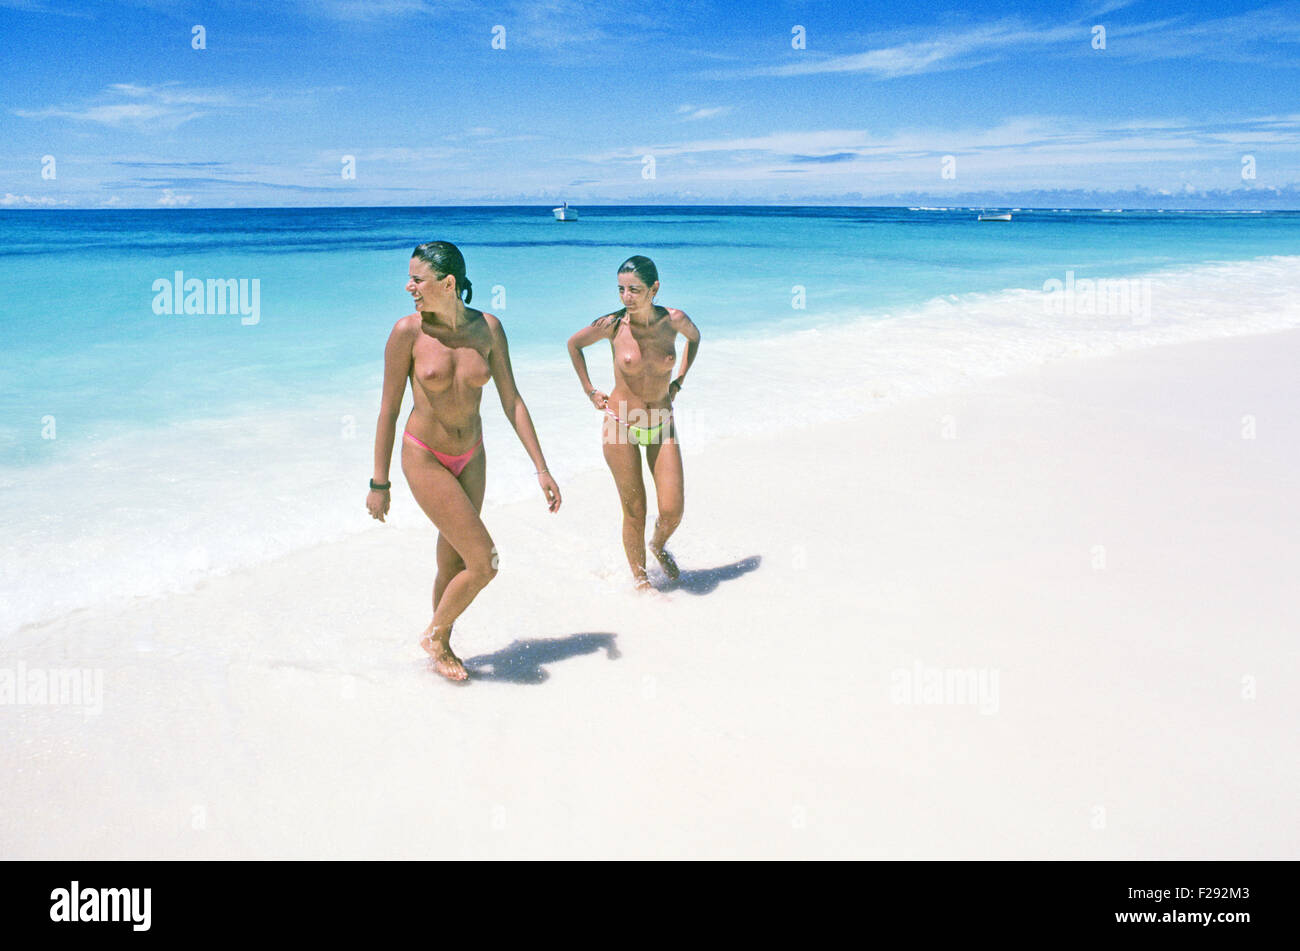 Nude beach naked women